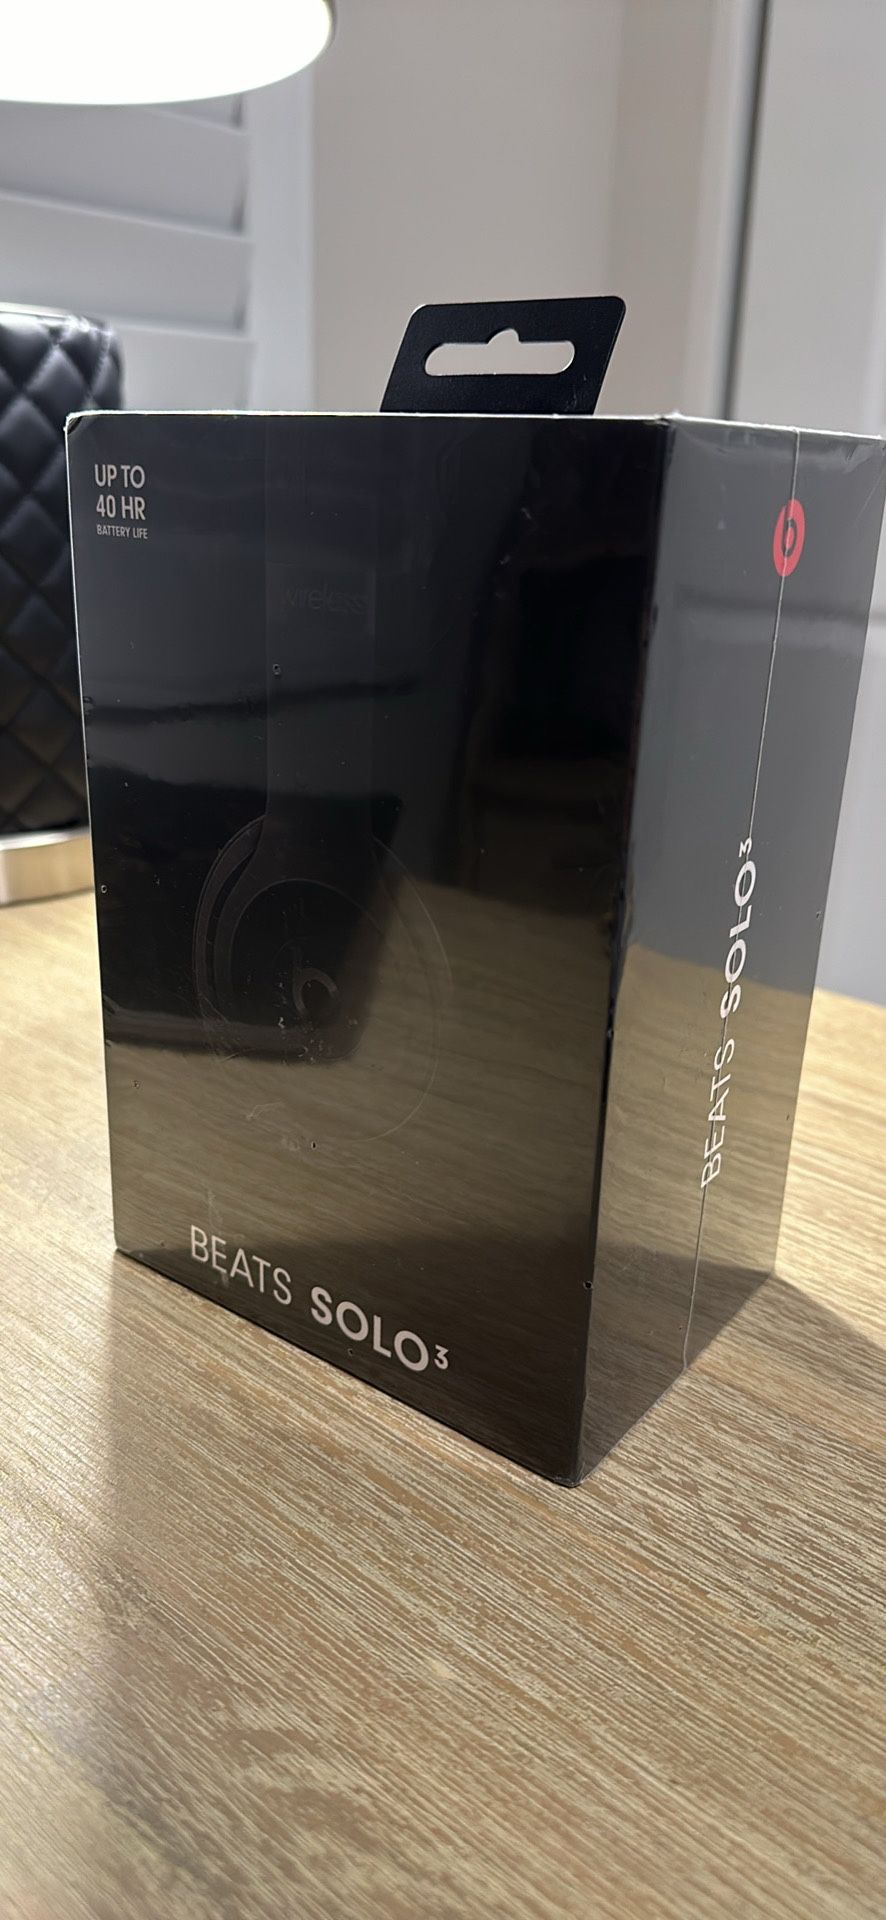 BEATS Solo 3 - New 